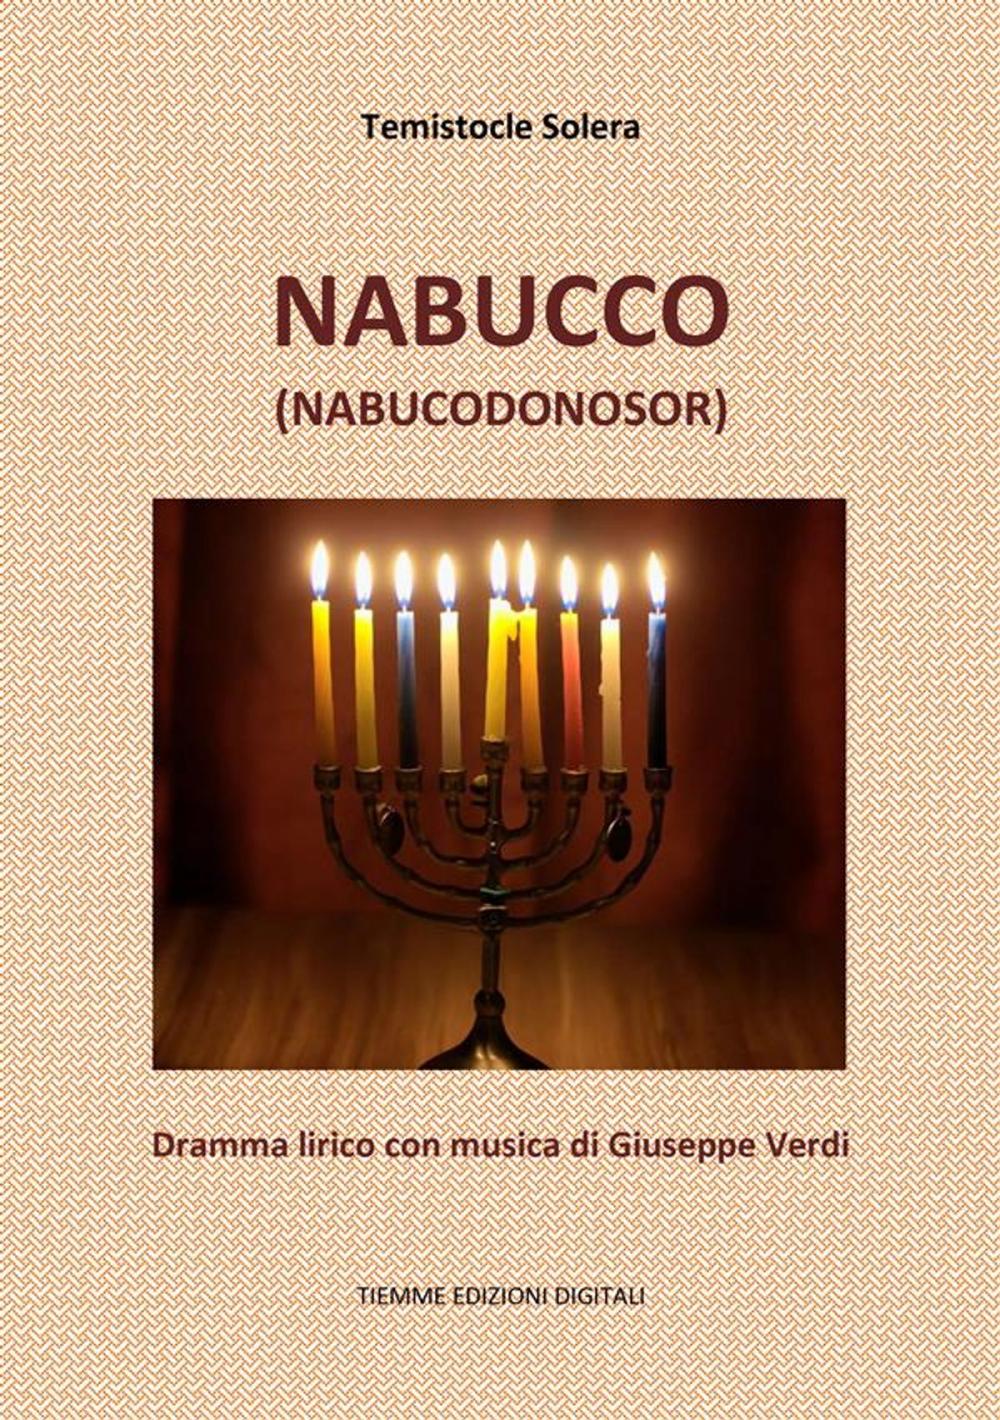 Big bigCover of Nabucco (Nabucodonosor)